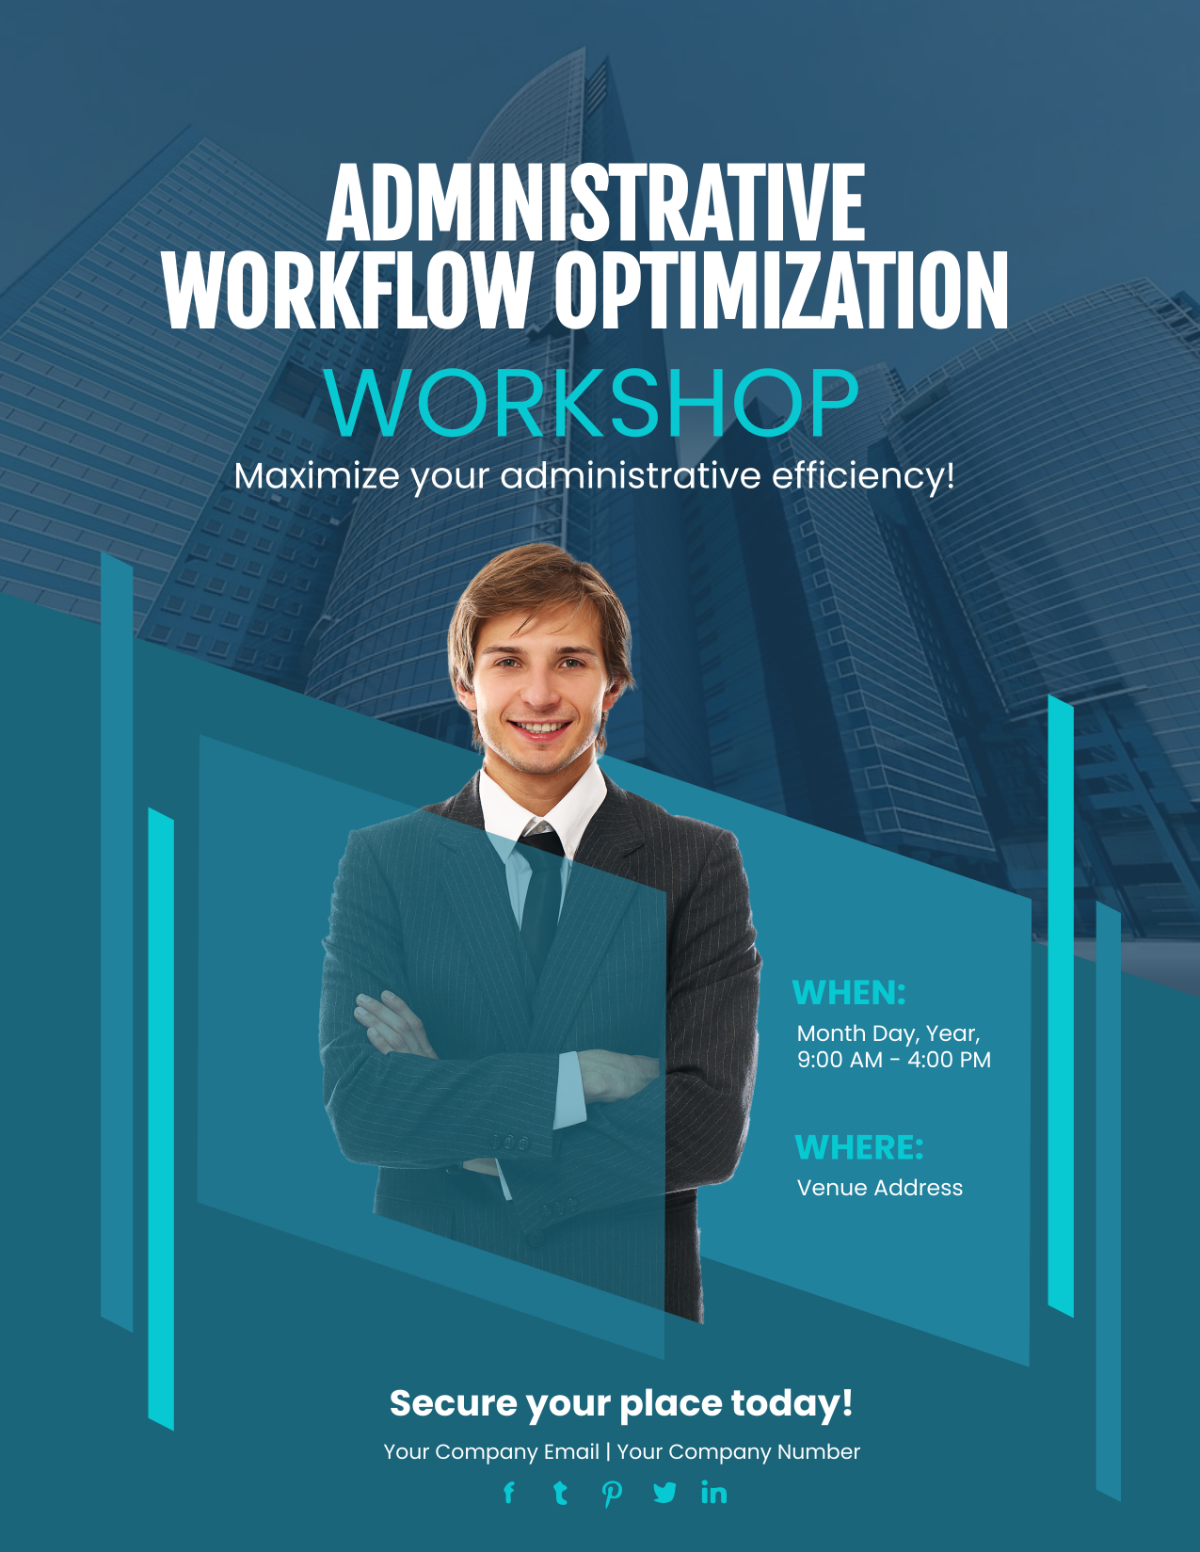 Administrative Workflow Optimization Workshop Flyer